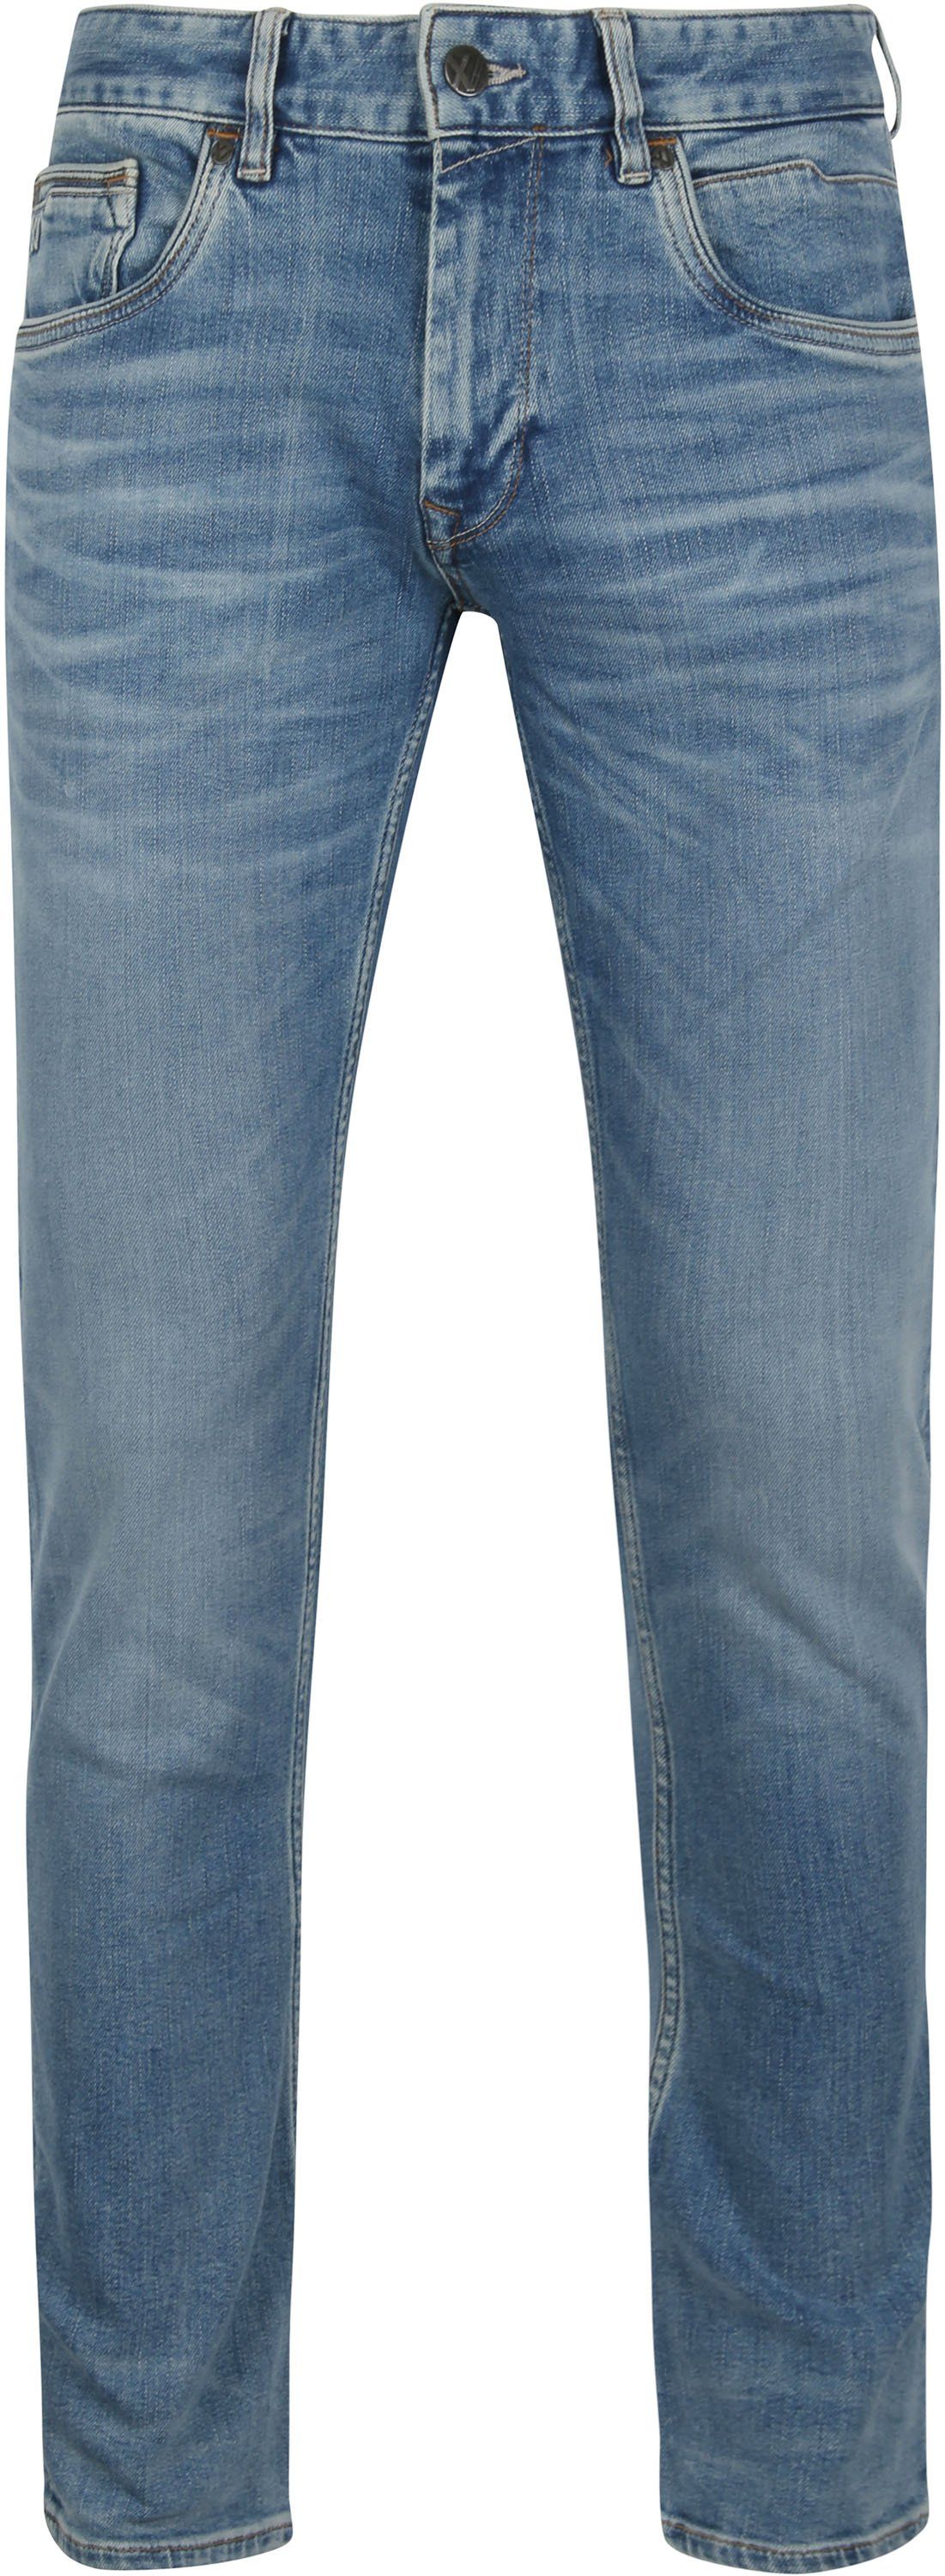 PME Legend XV Jeans Light Mid Denim Blue size W 29